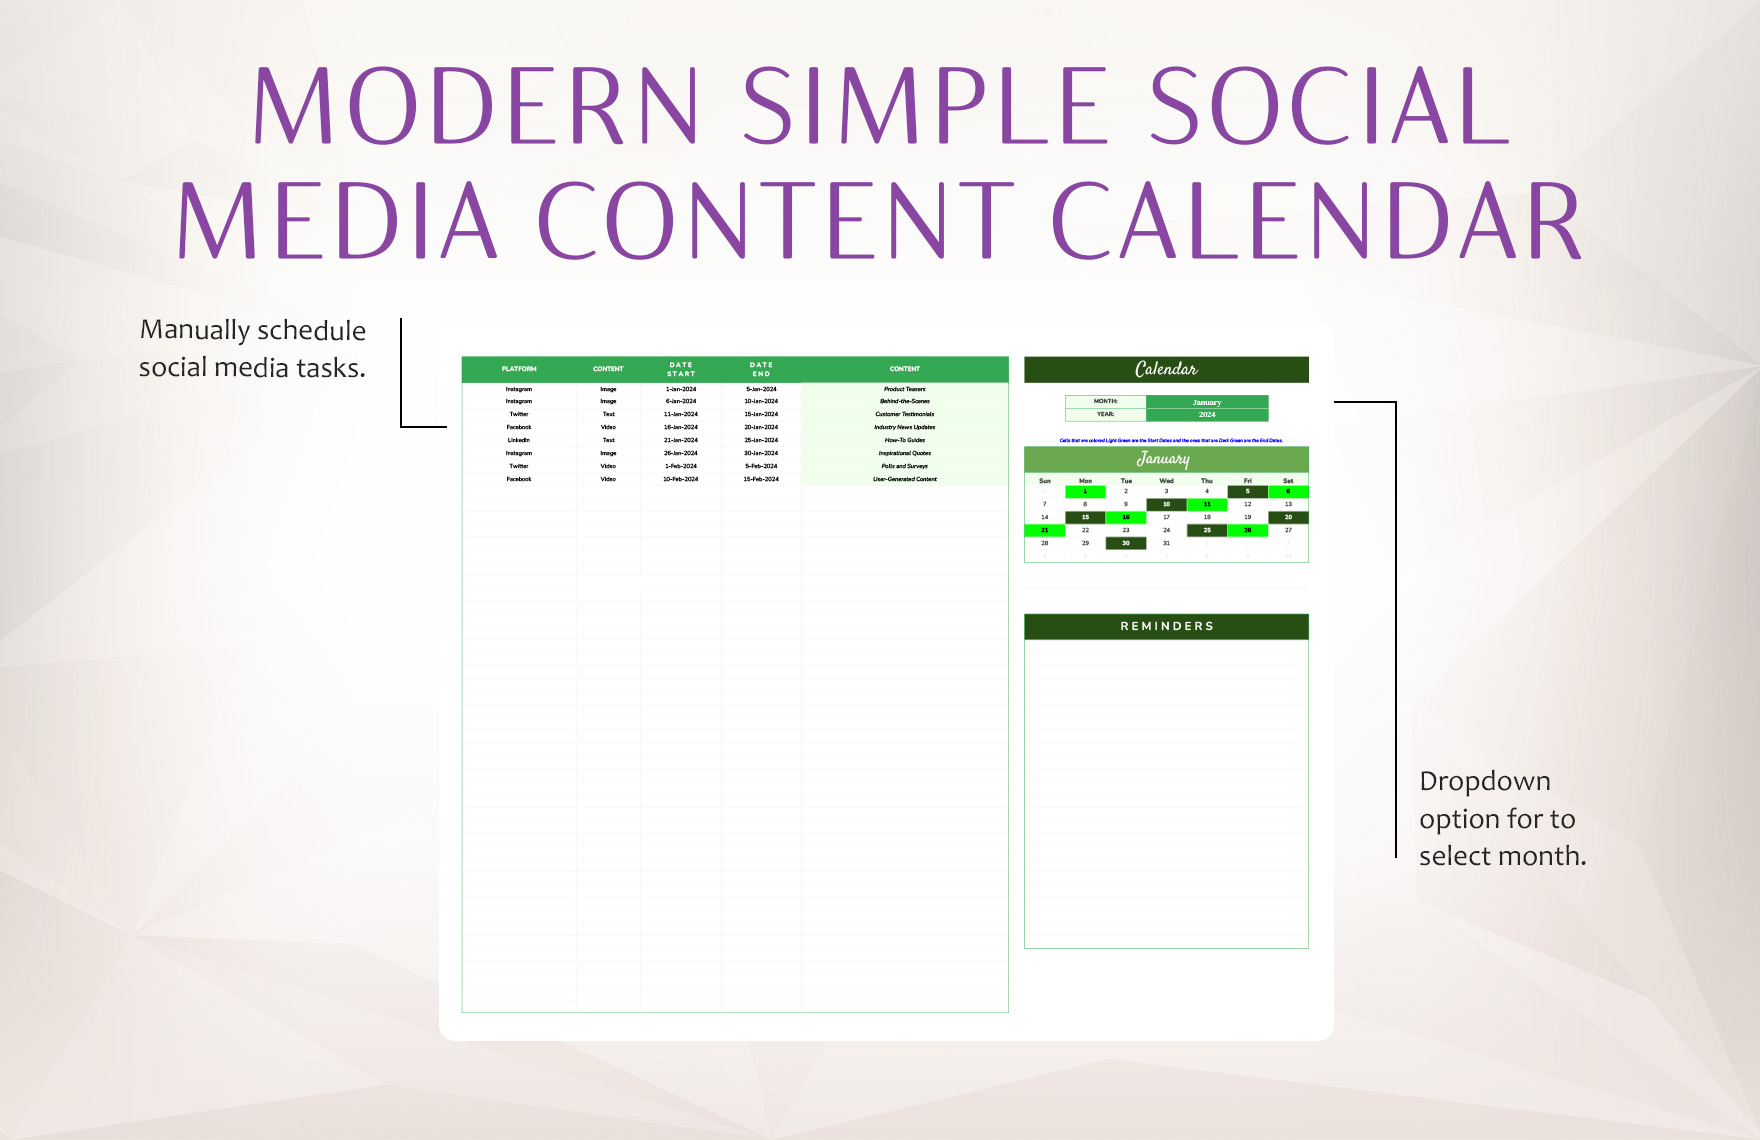 Modern Simple Social Media Content Calendar Template